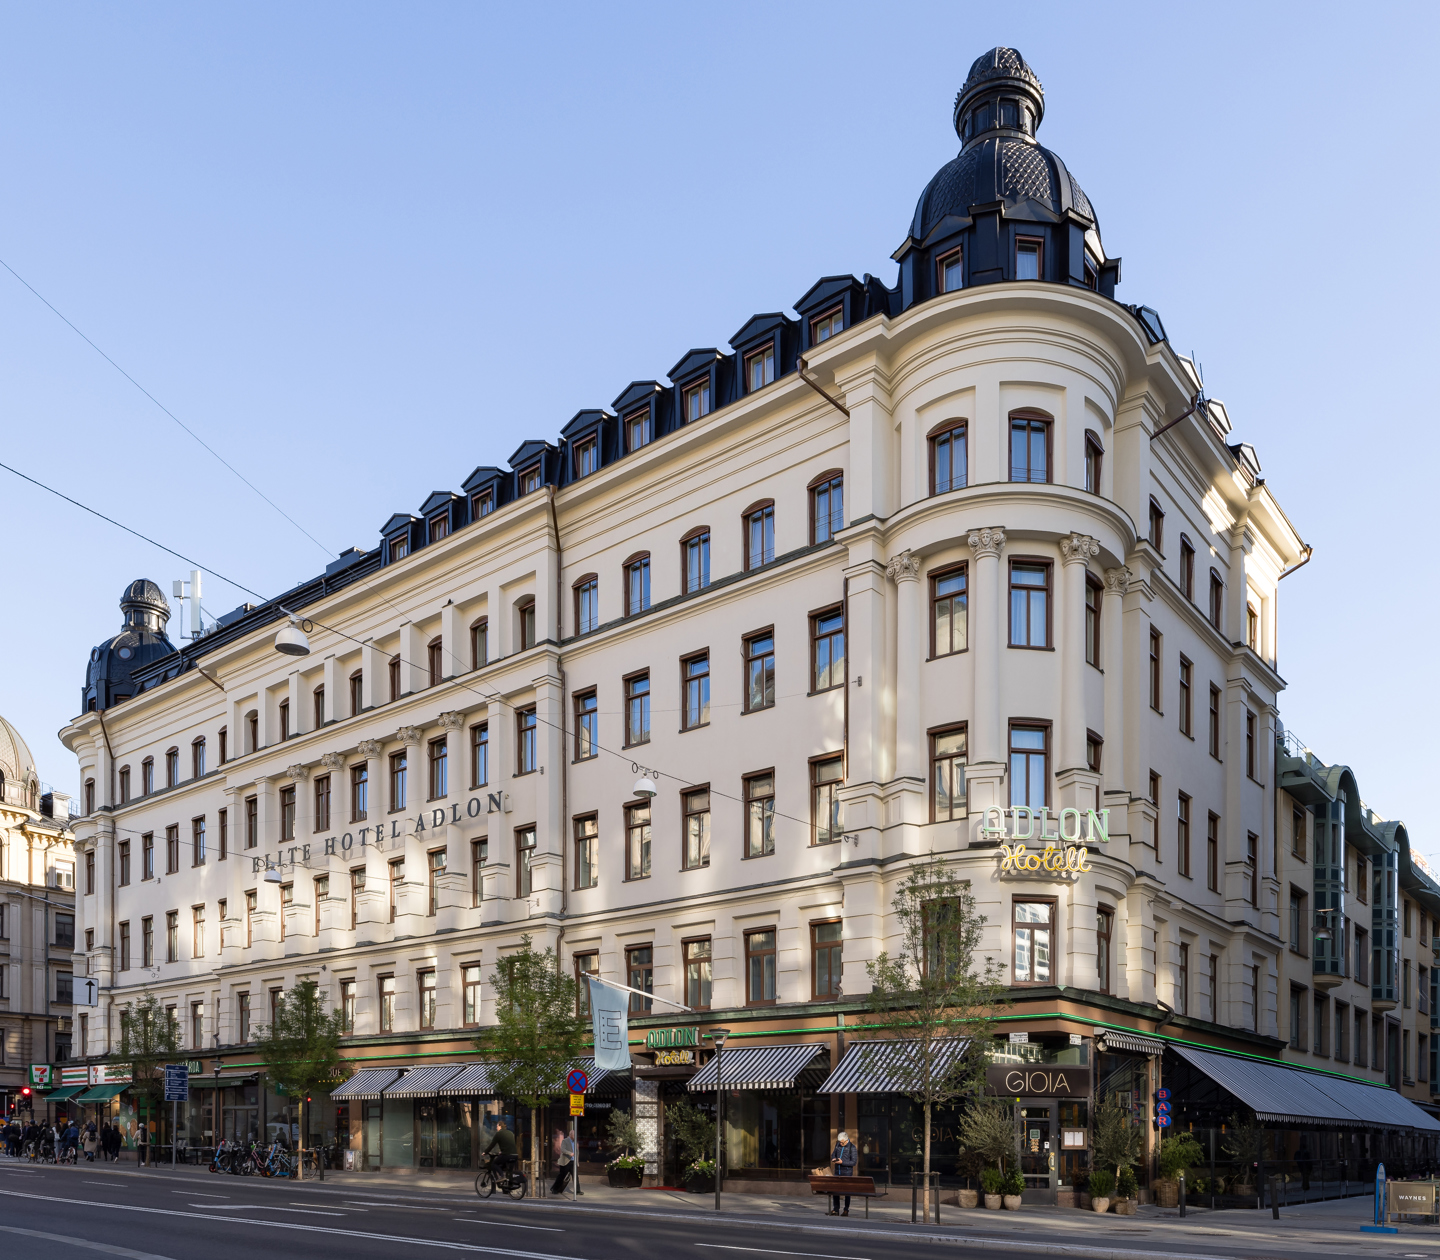 The facade at Elite Hotel Adlon in Stockholm